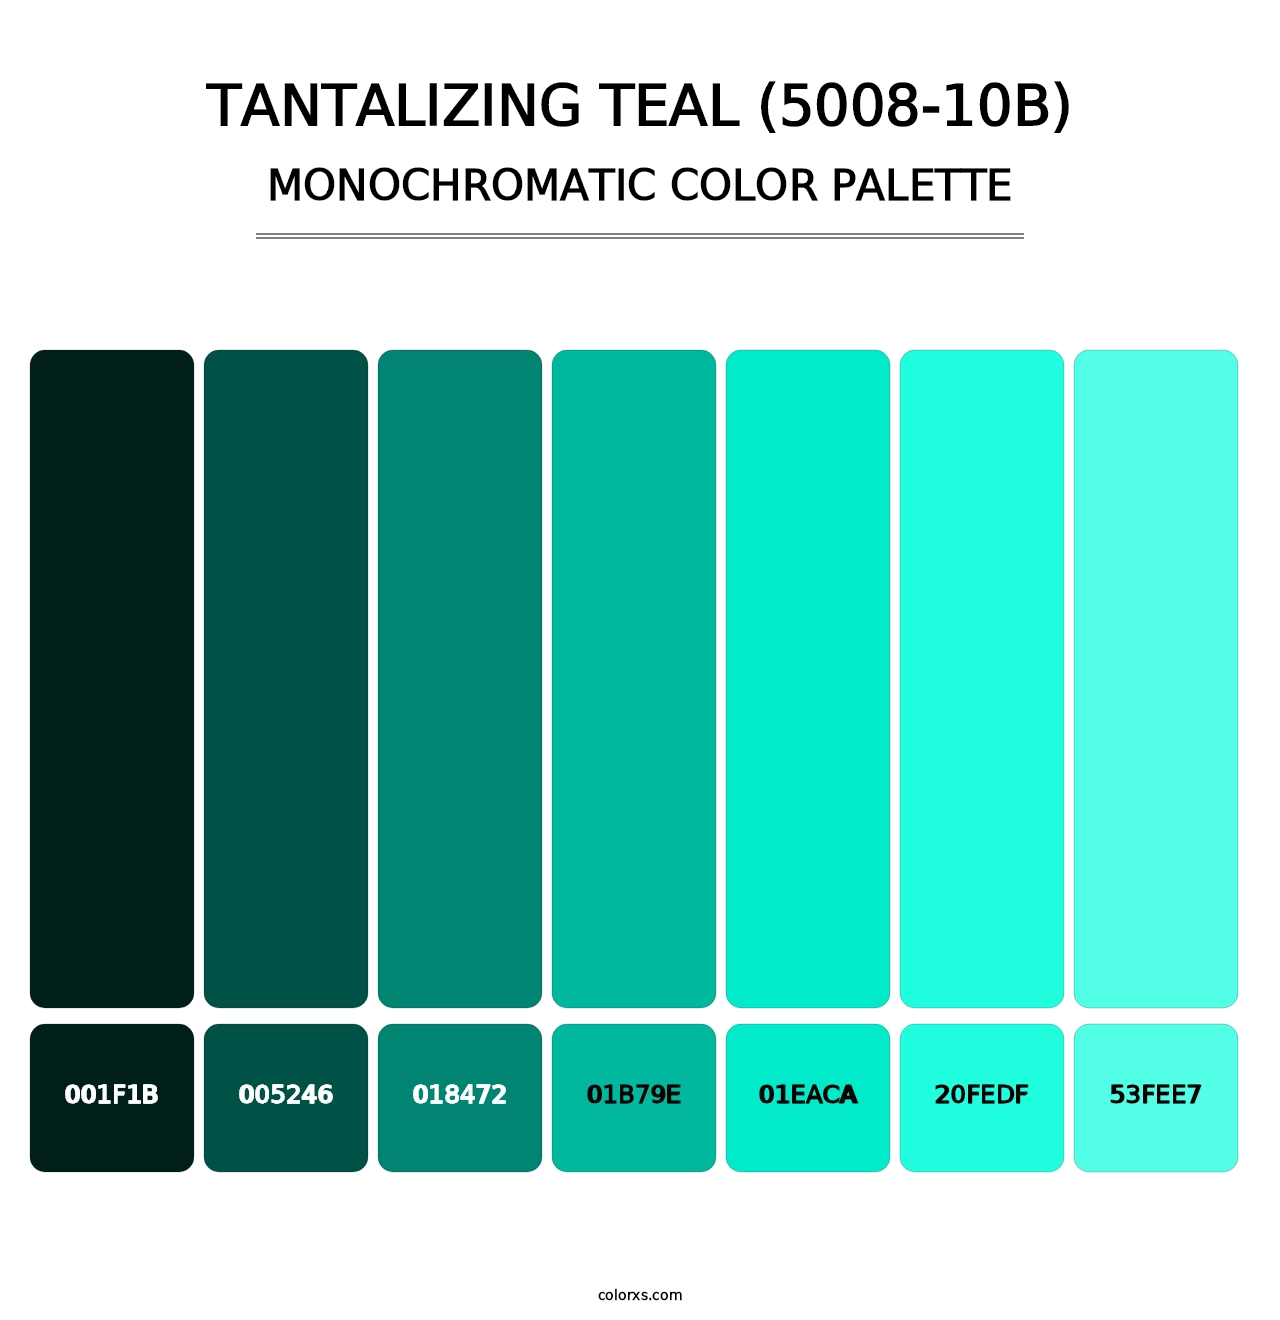 Tantalizing Teal (5008-10B) - Monochromatic Color Palette